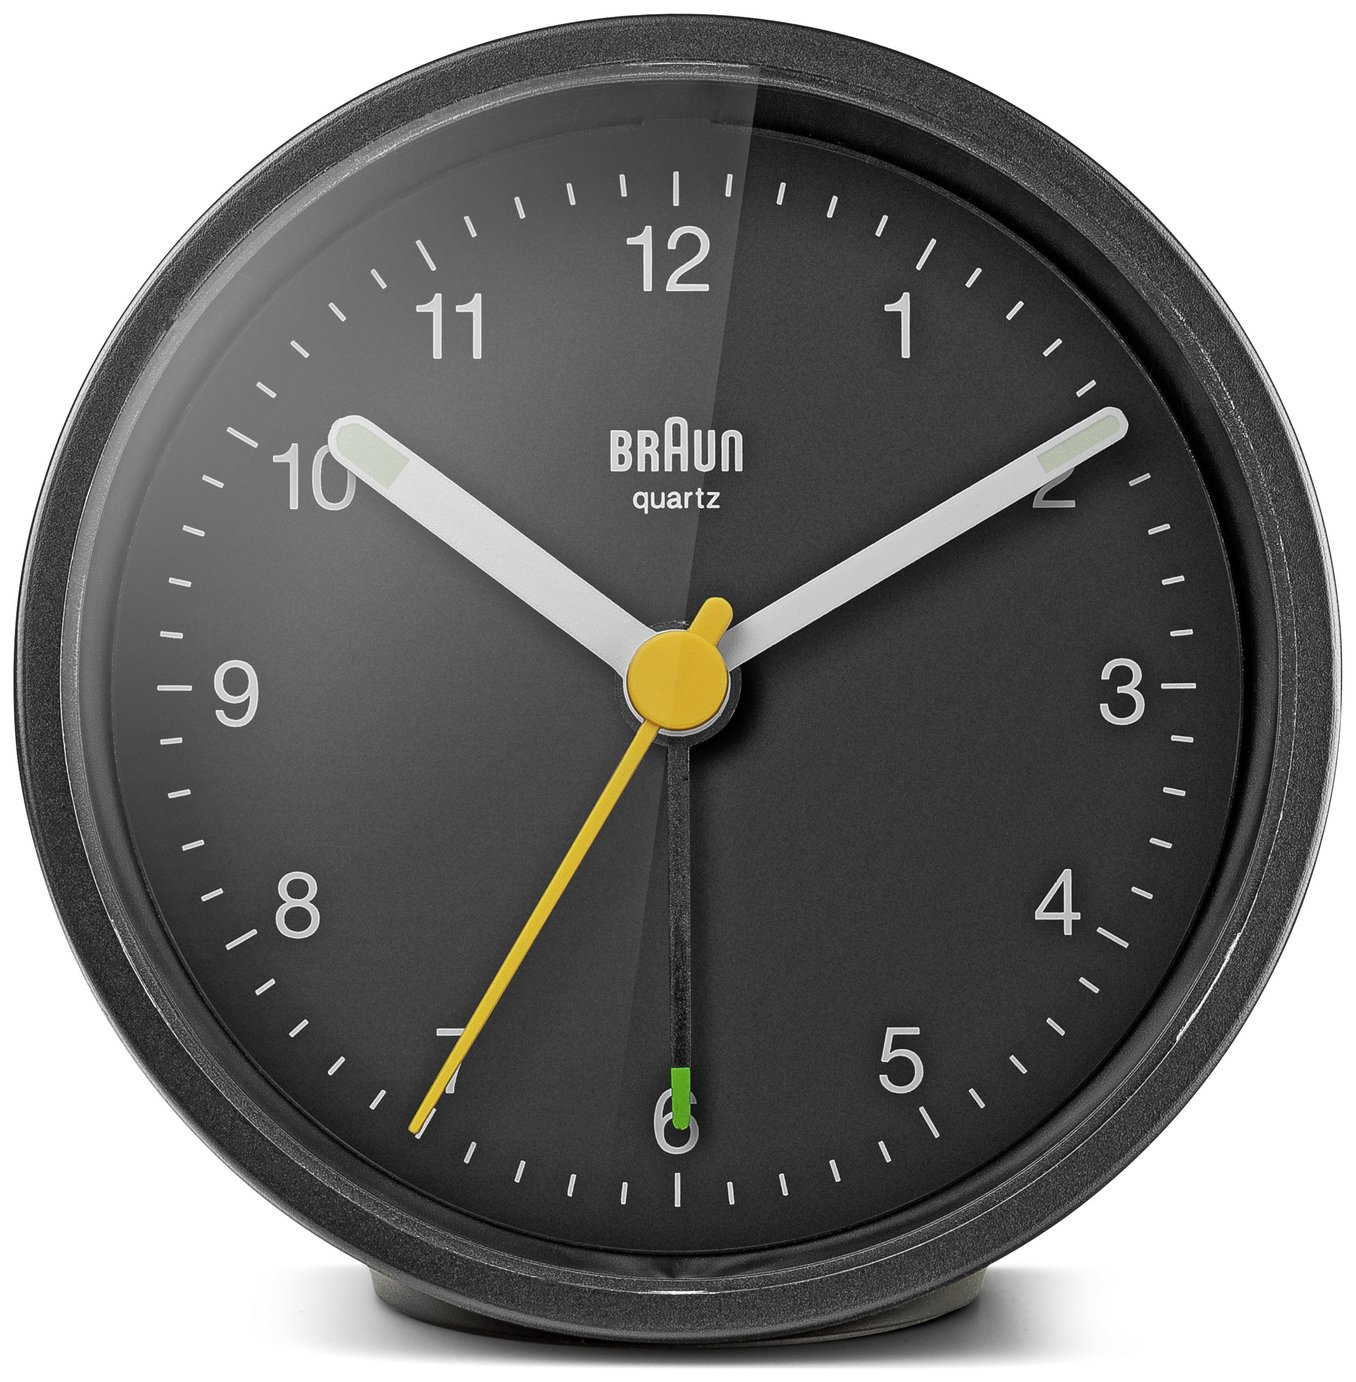 Braun Classic Analogue Alarm Clock - Black